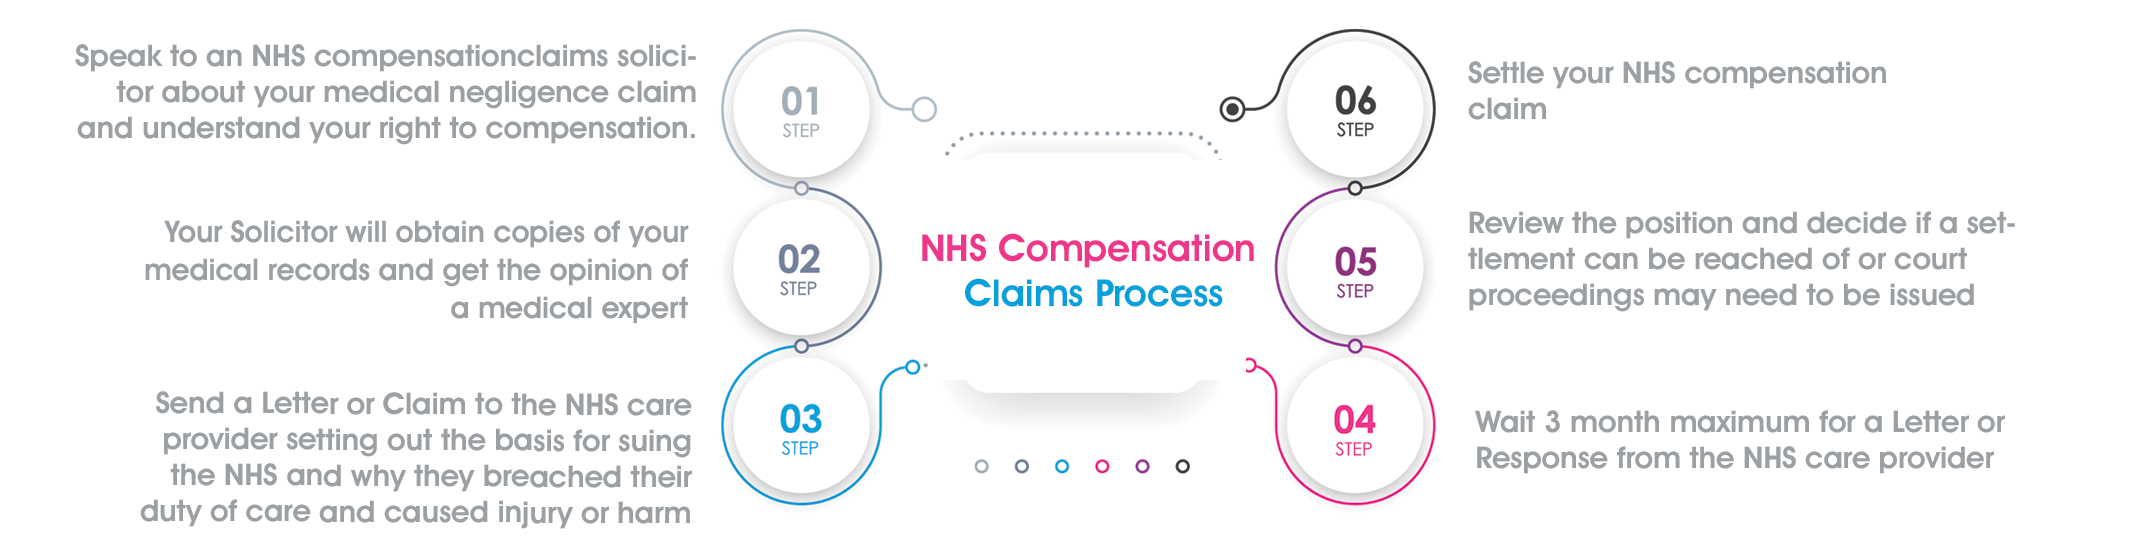 NHS Compensation Claims Process